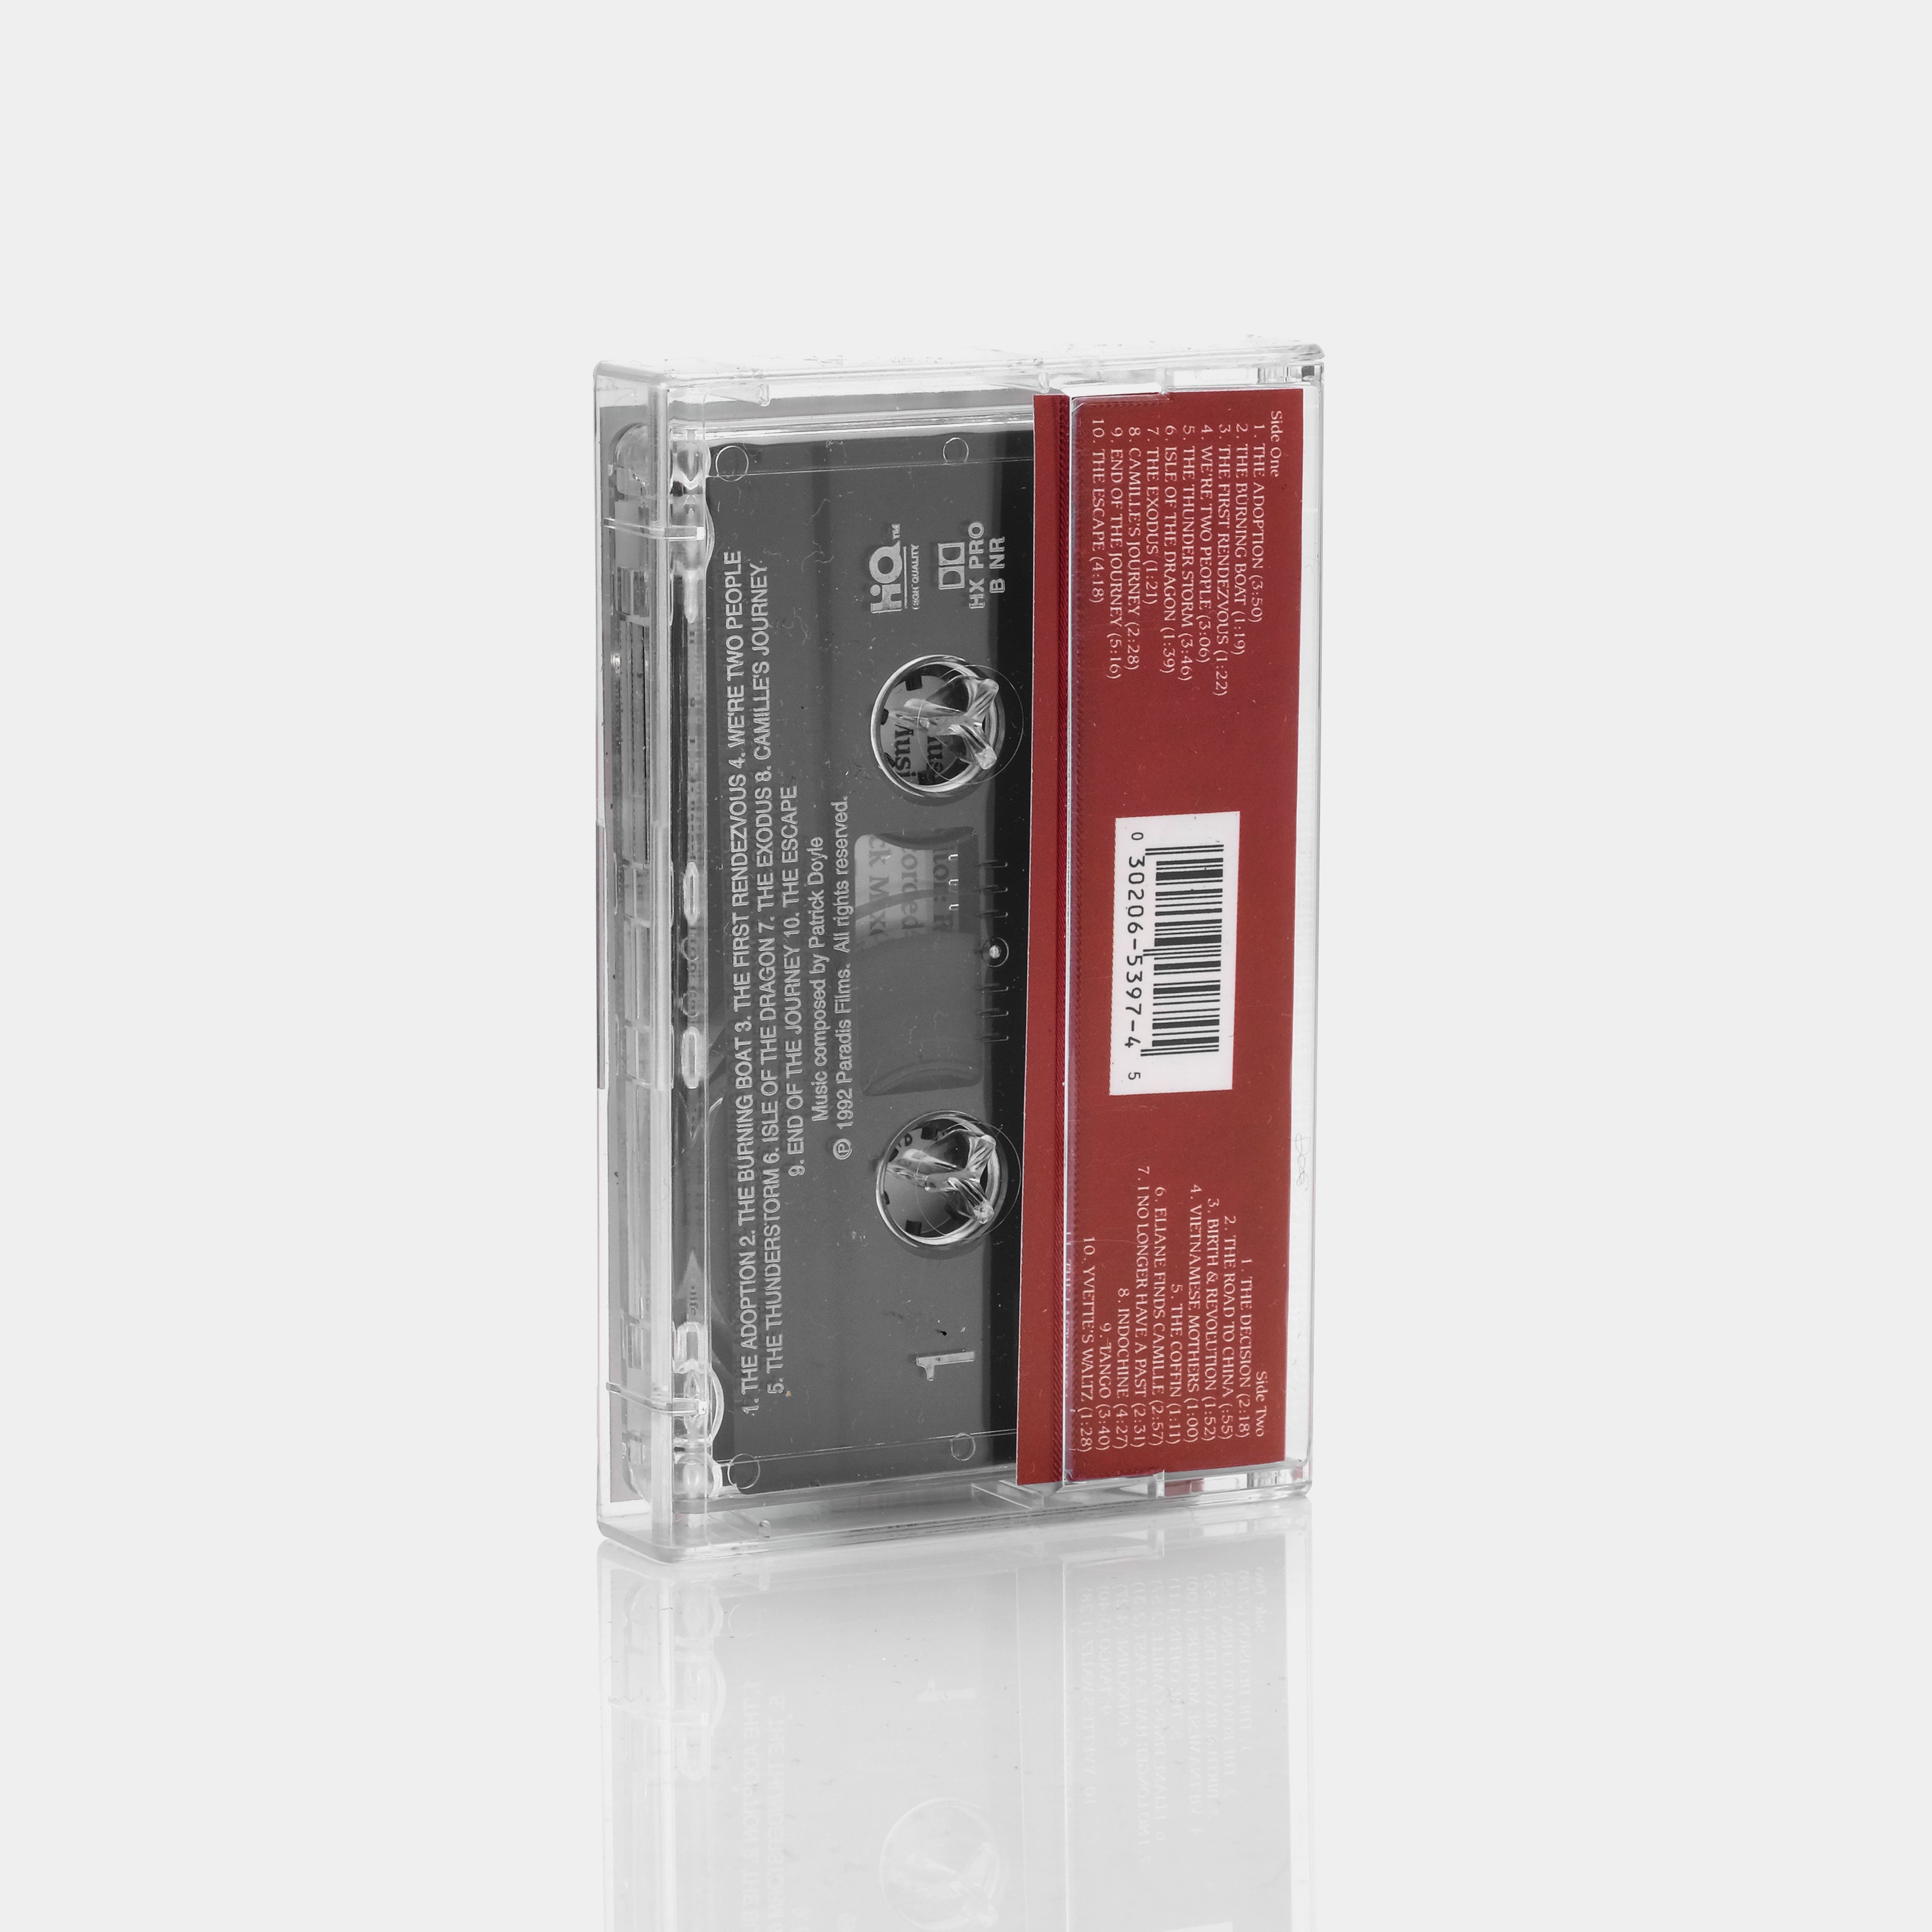 Patrick Doyle - Indochine (Original Motion Picture Soundtrack) Cassette Tape